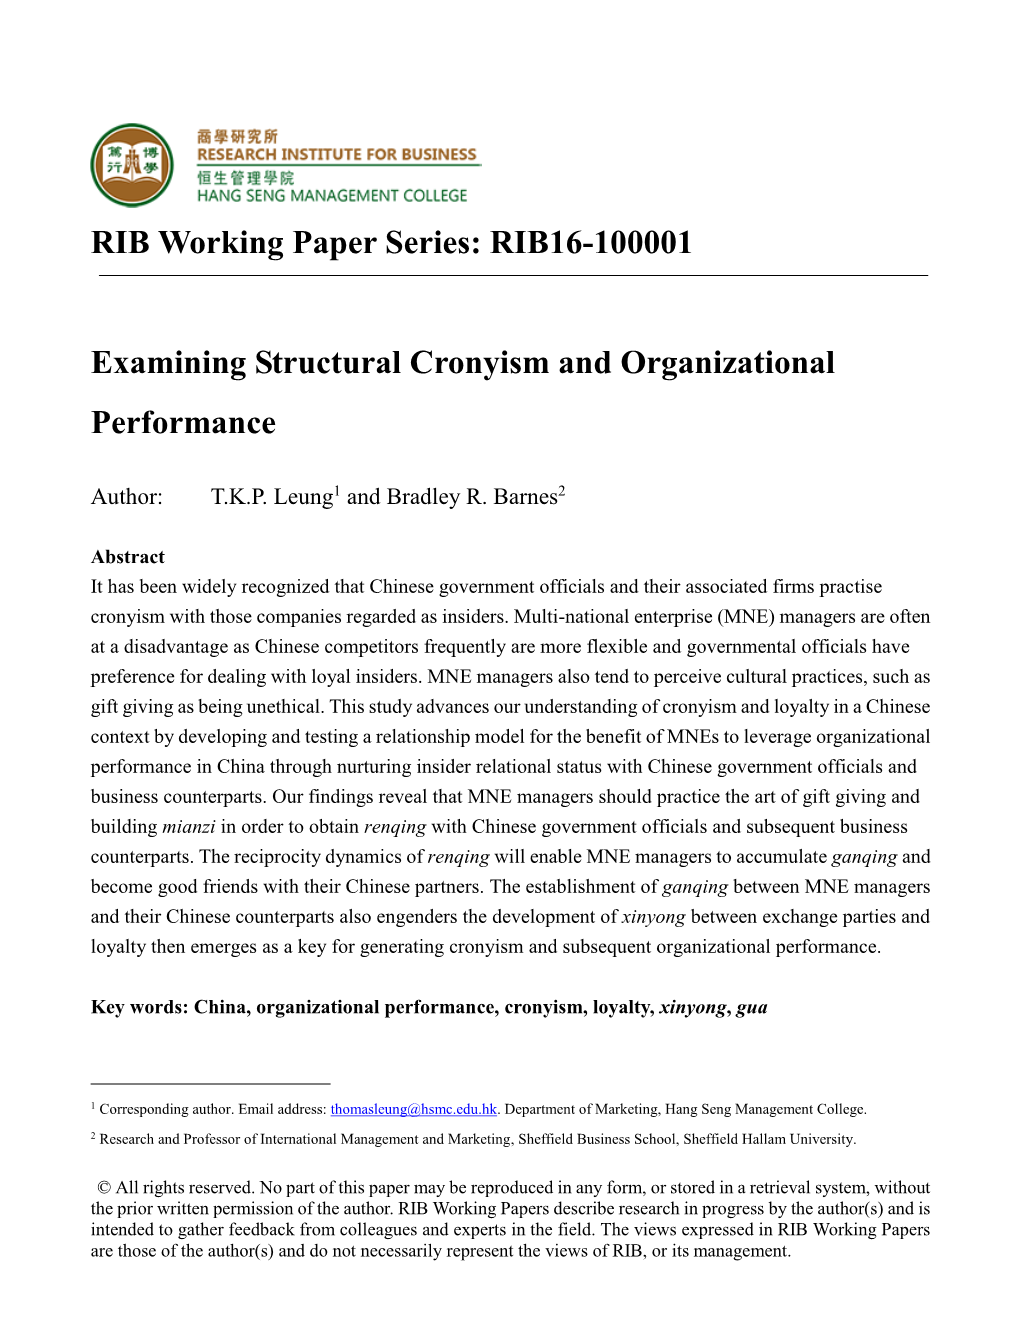 RIB Working Paper Series: RIB16-100001 Examining Structural Cronyism and Organizational Performance